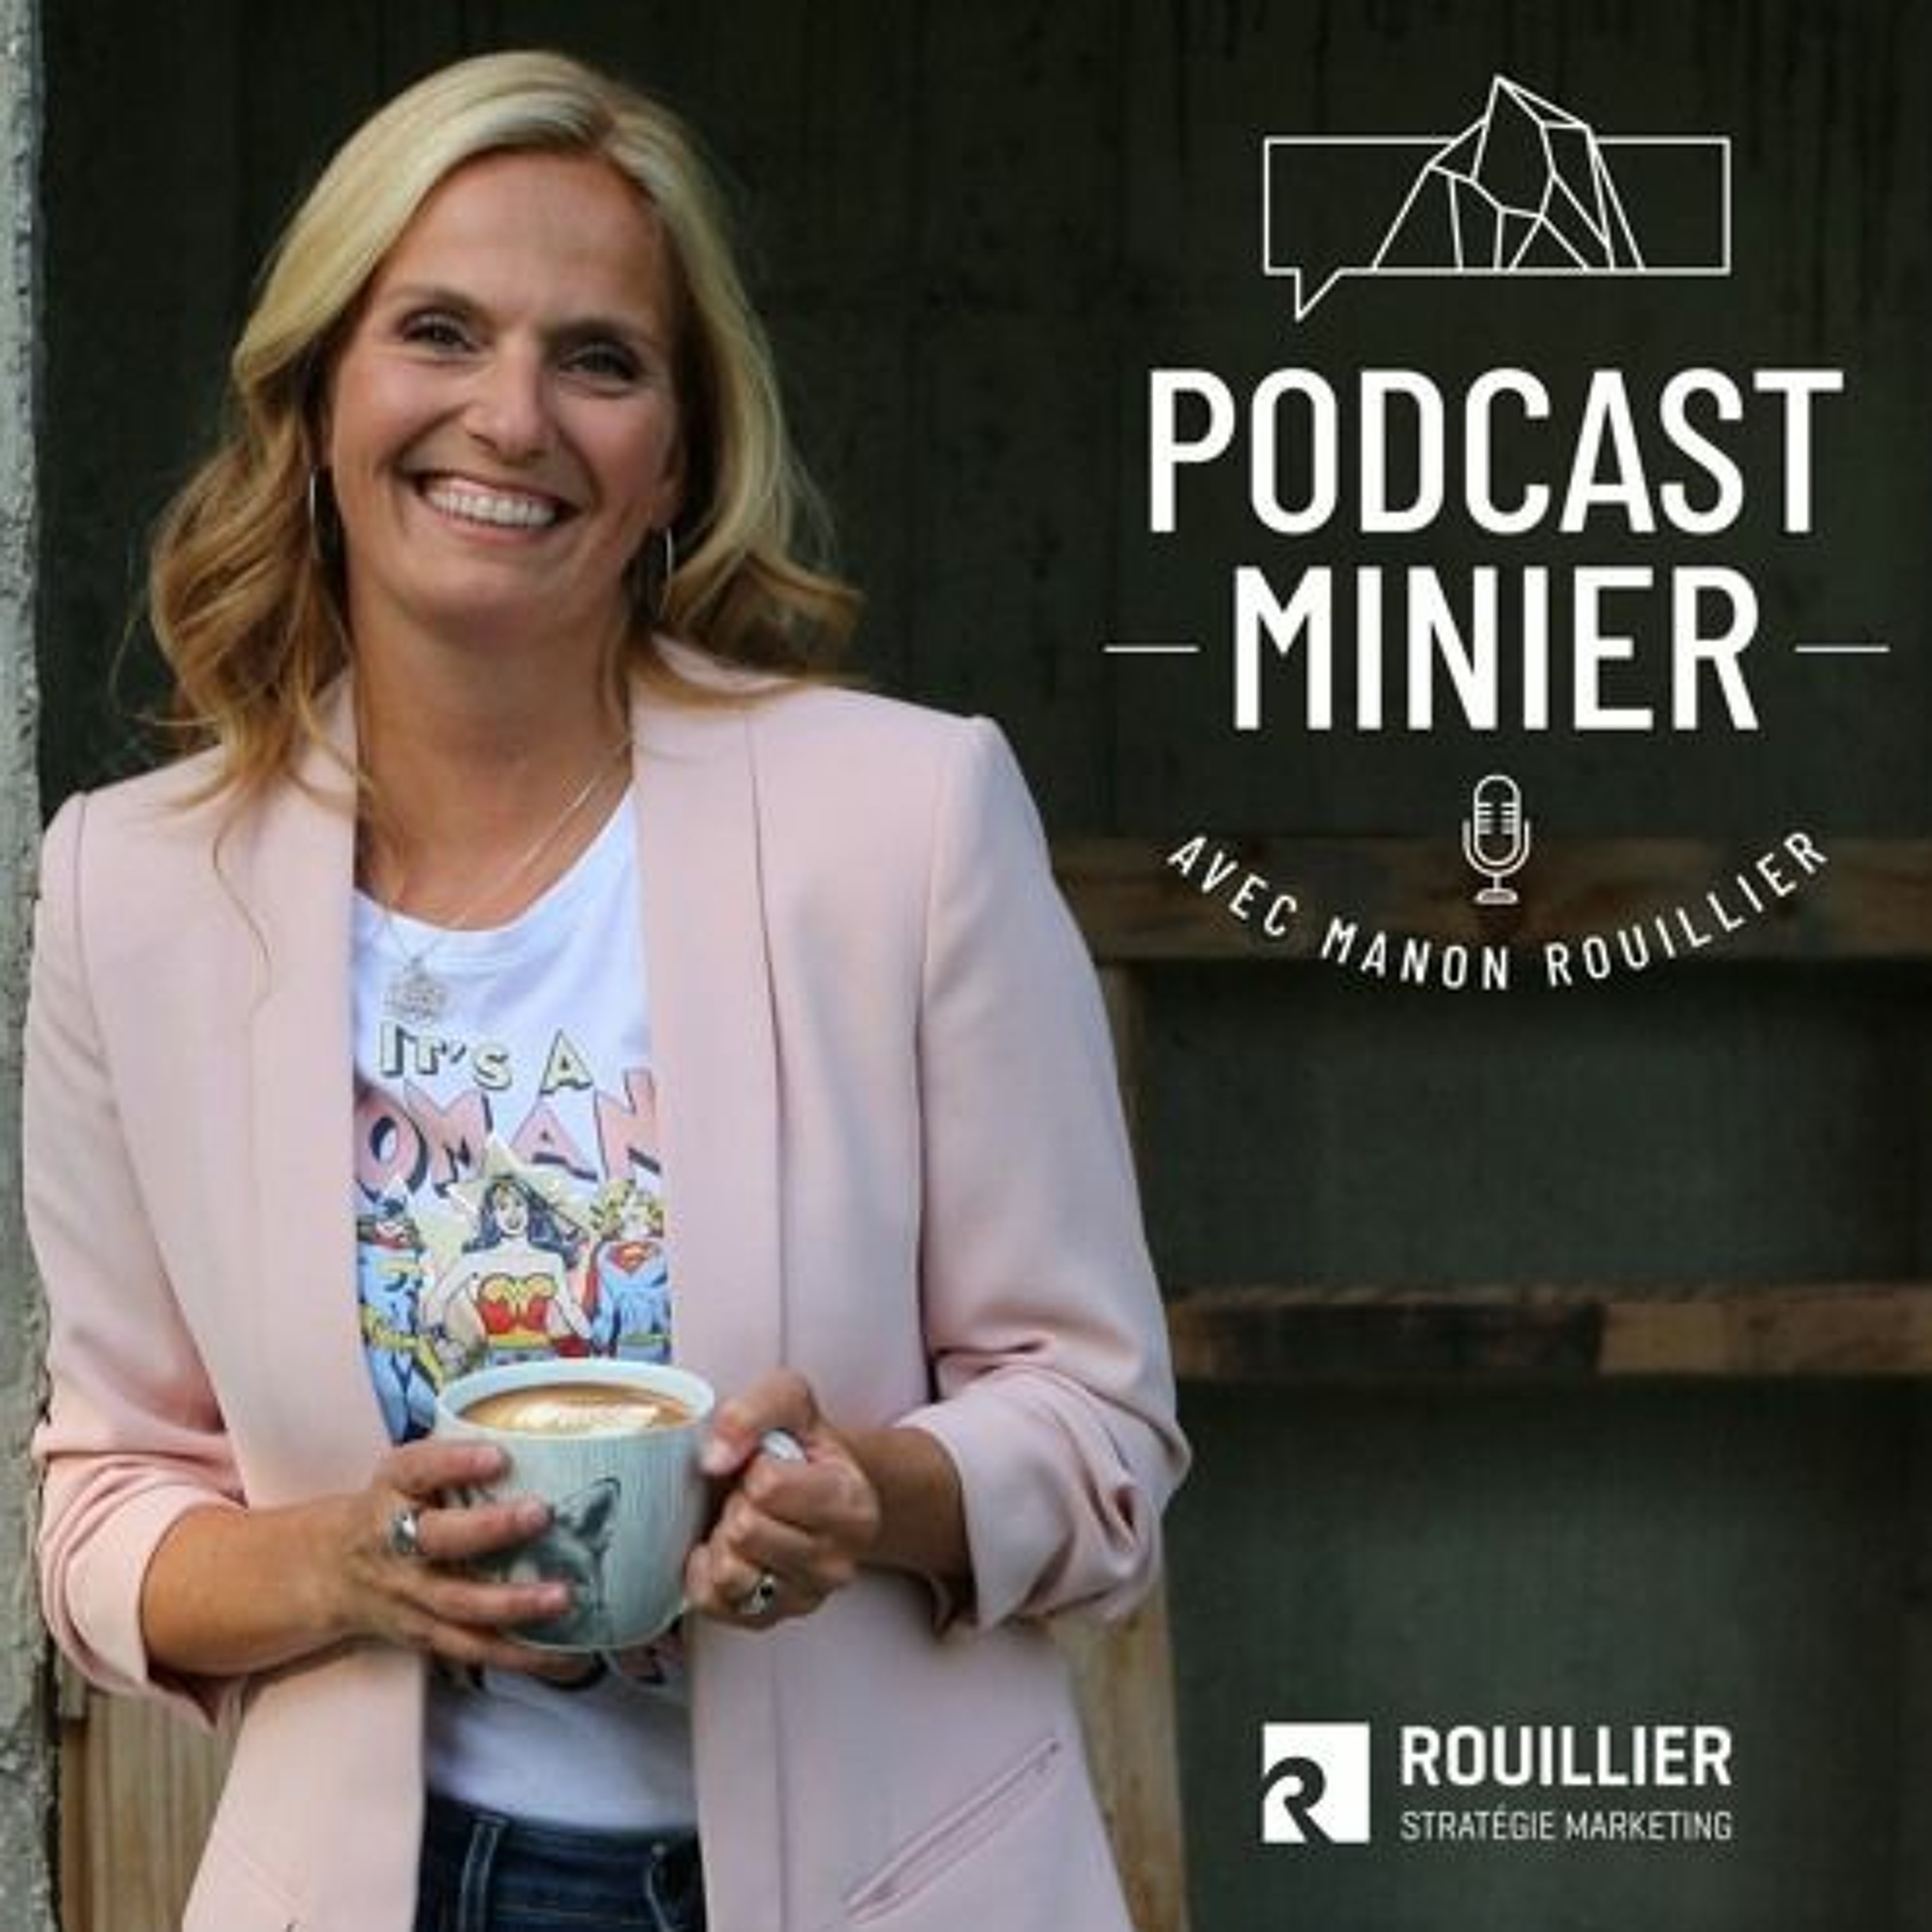 Podcast Minier